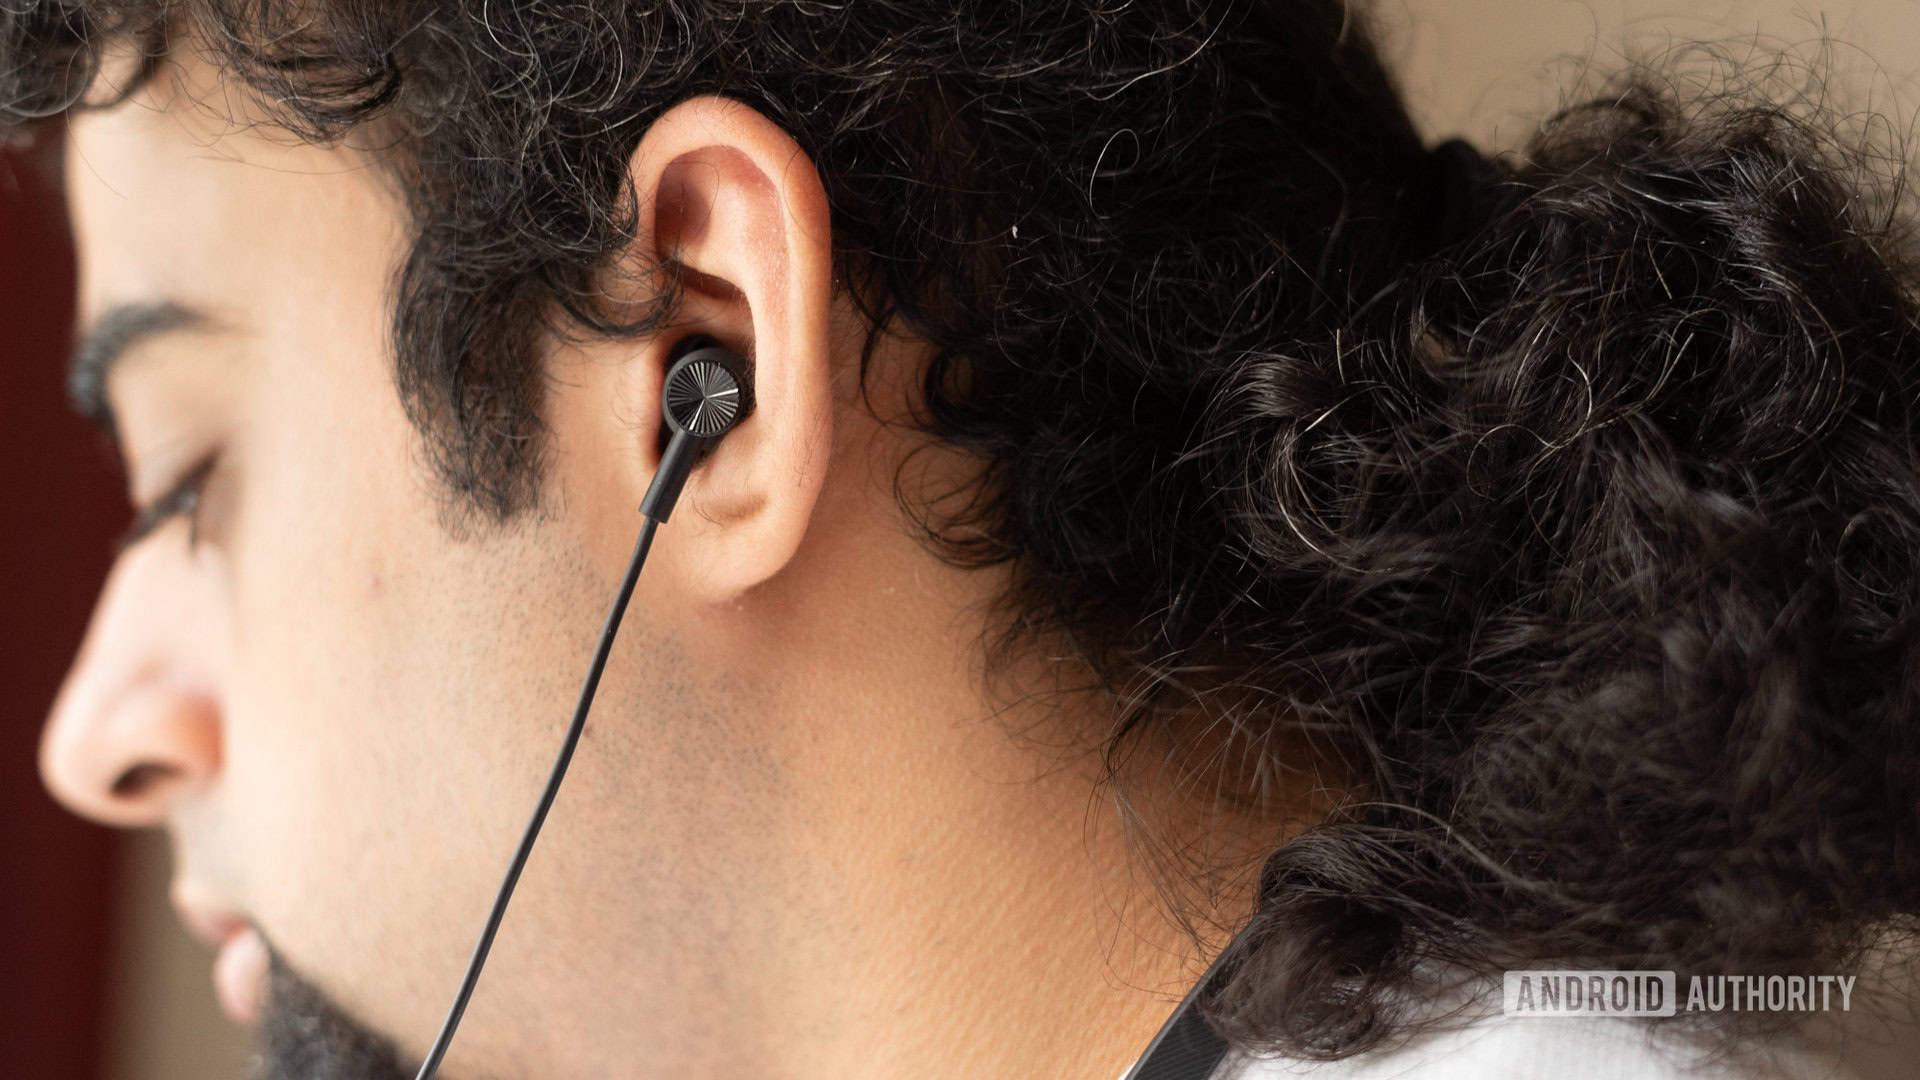 Mi Neckband Bluetooth Earphones focus on earbuds